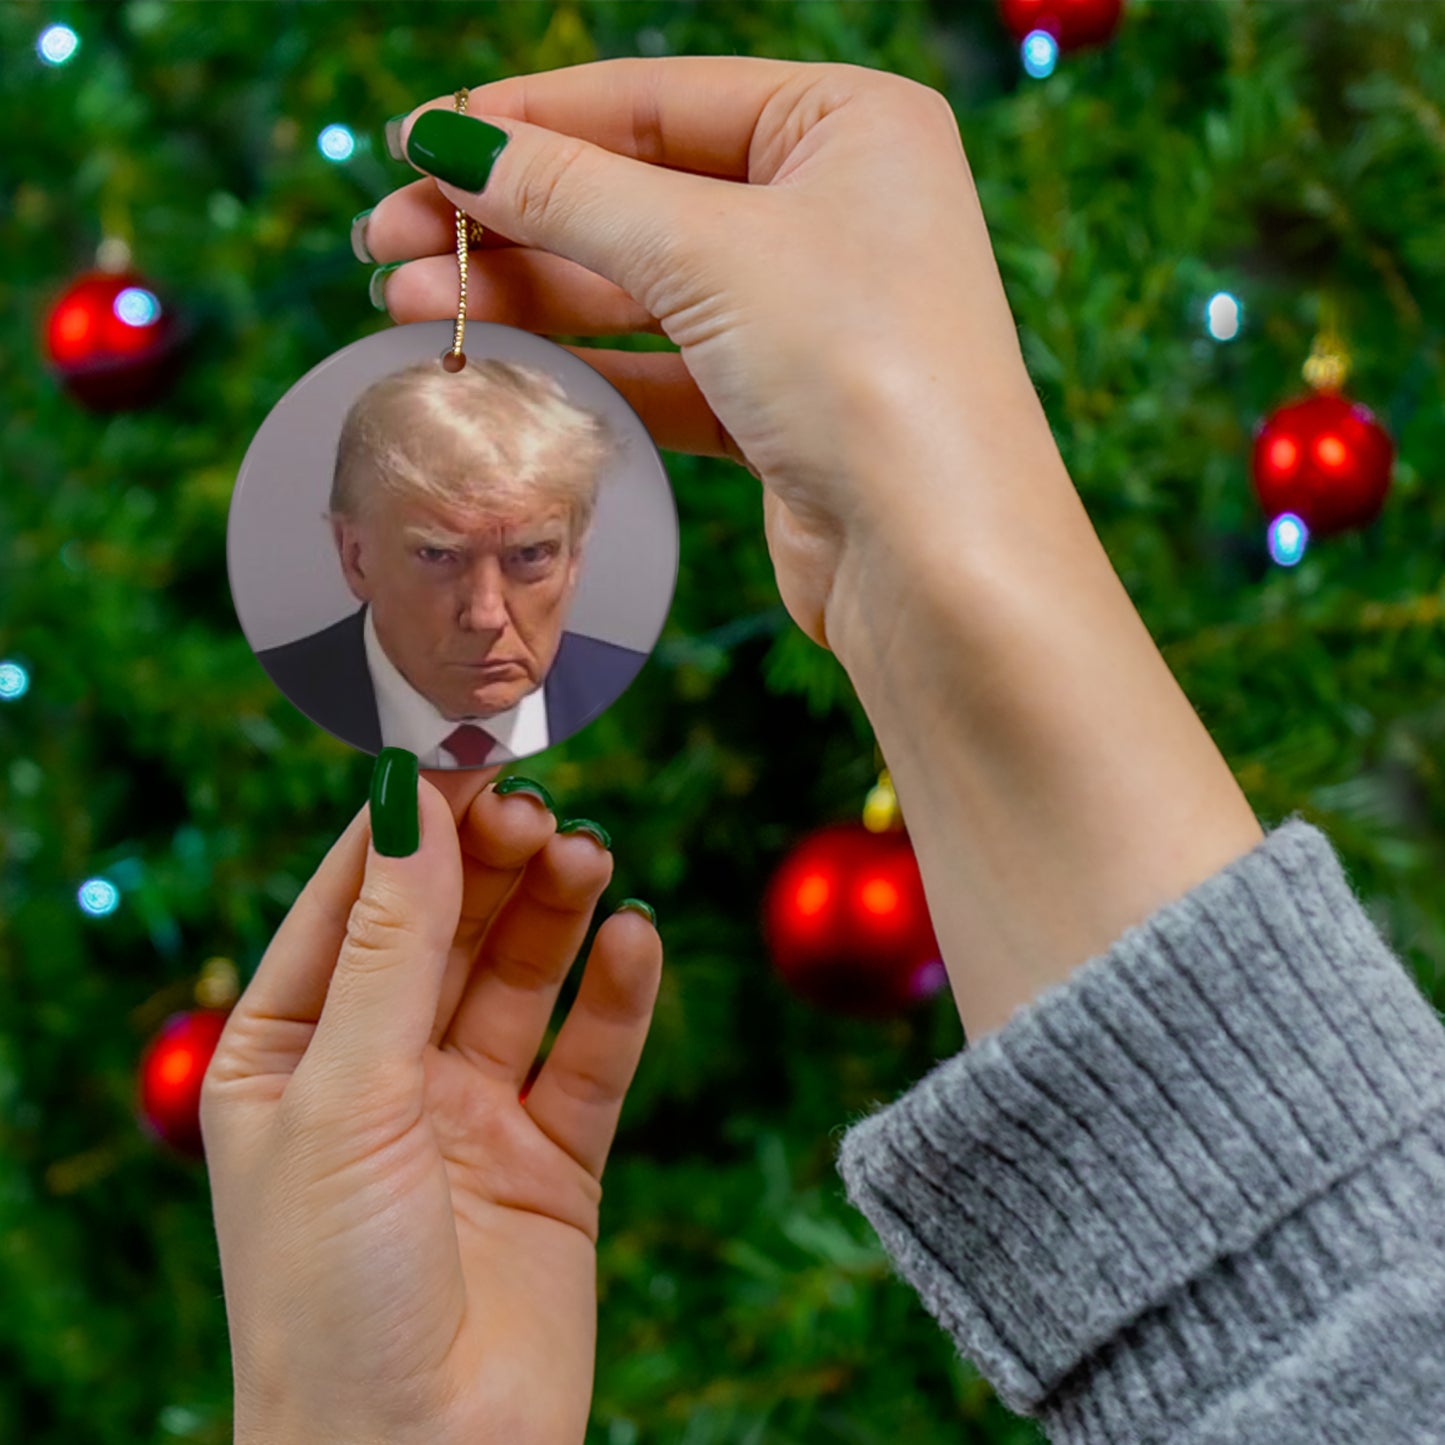 Trump Mugshot Ornament